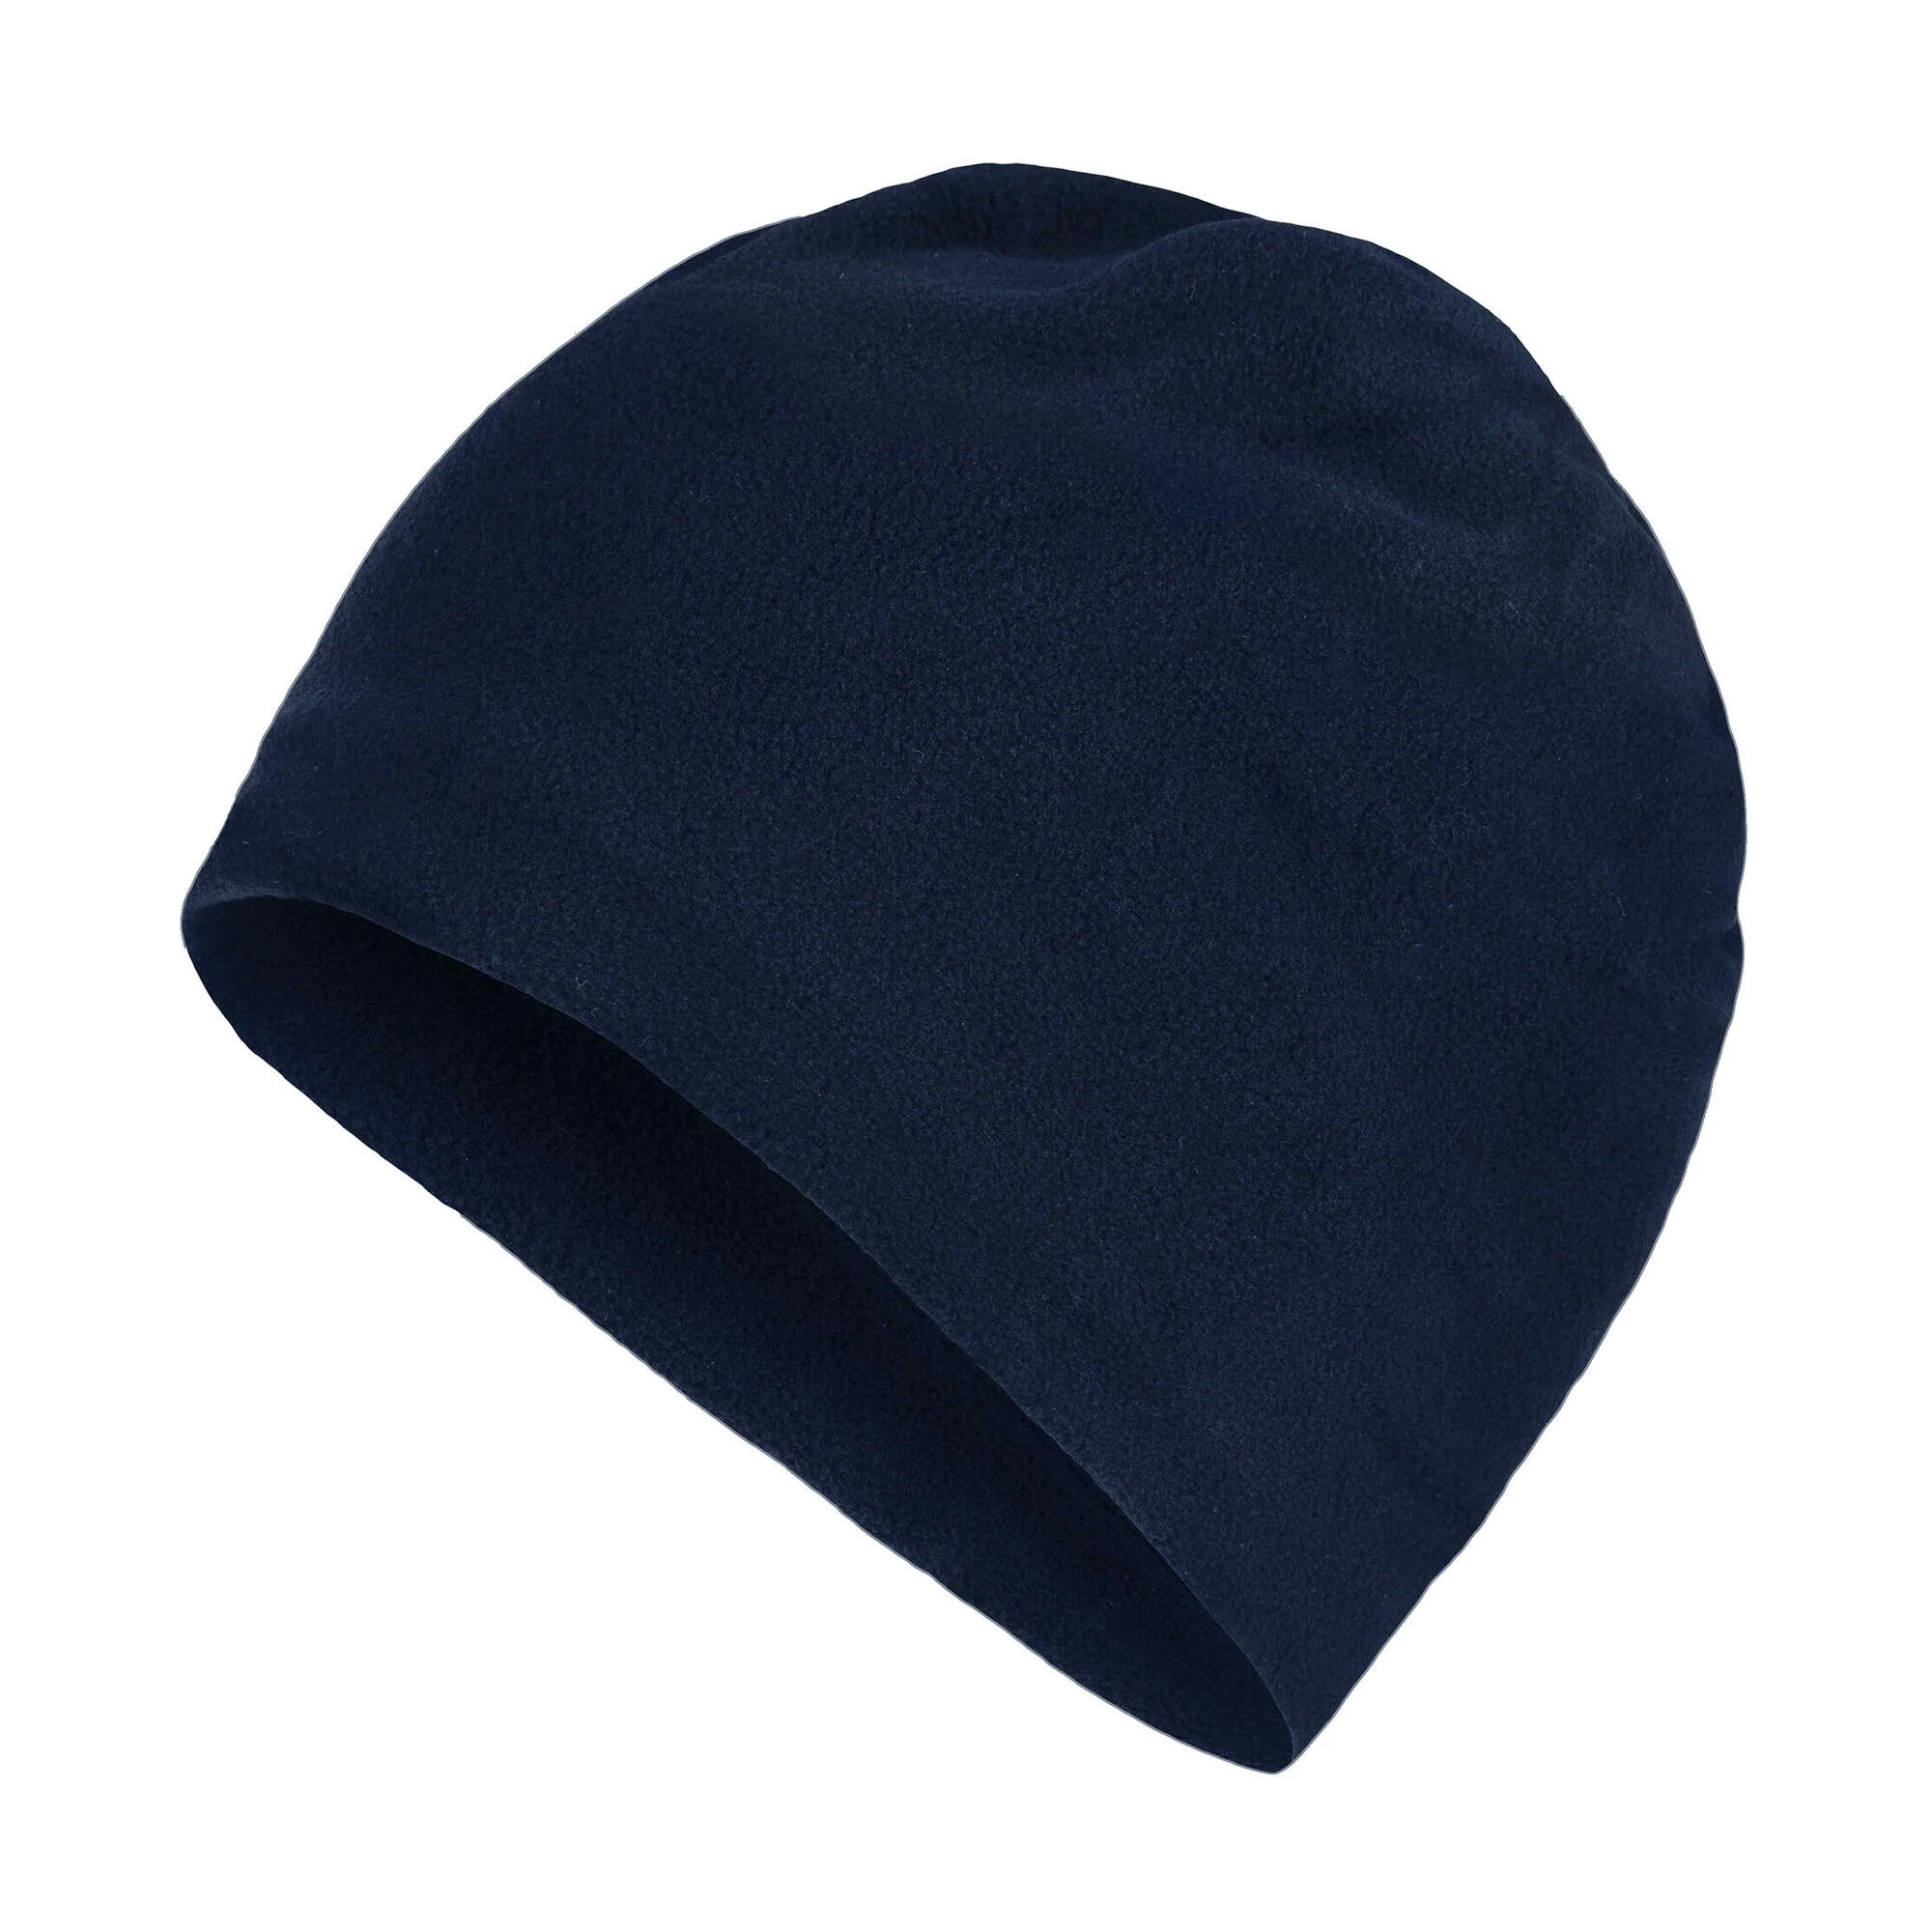 Unisex Thinsulate Thermal Winter Fleece Hat (Navy) 2/4